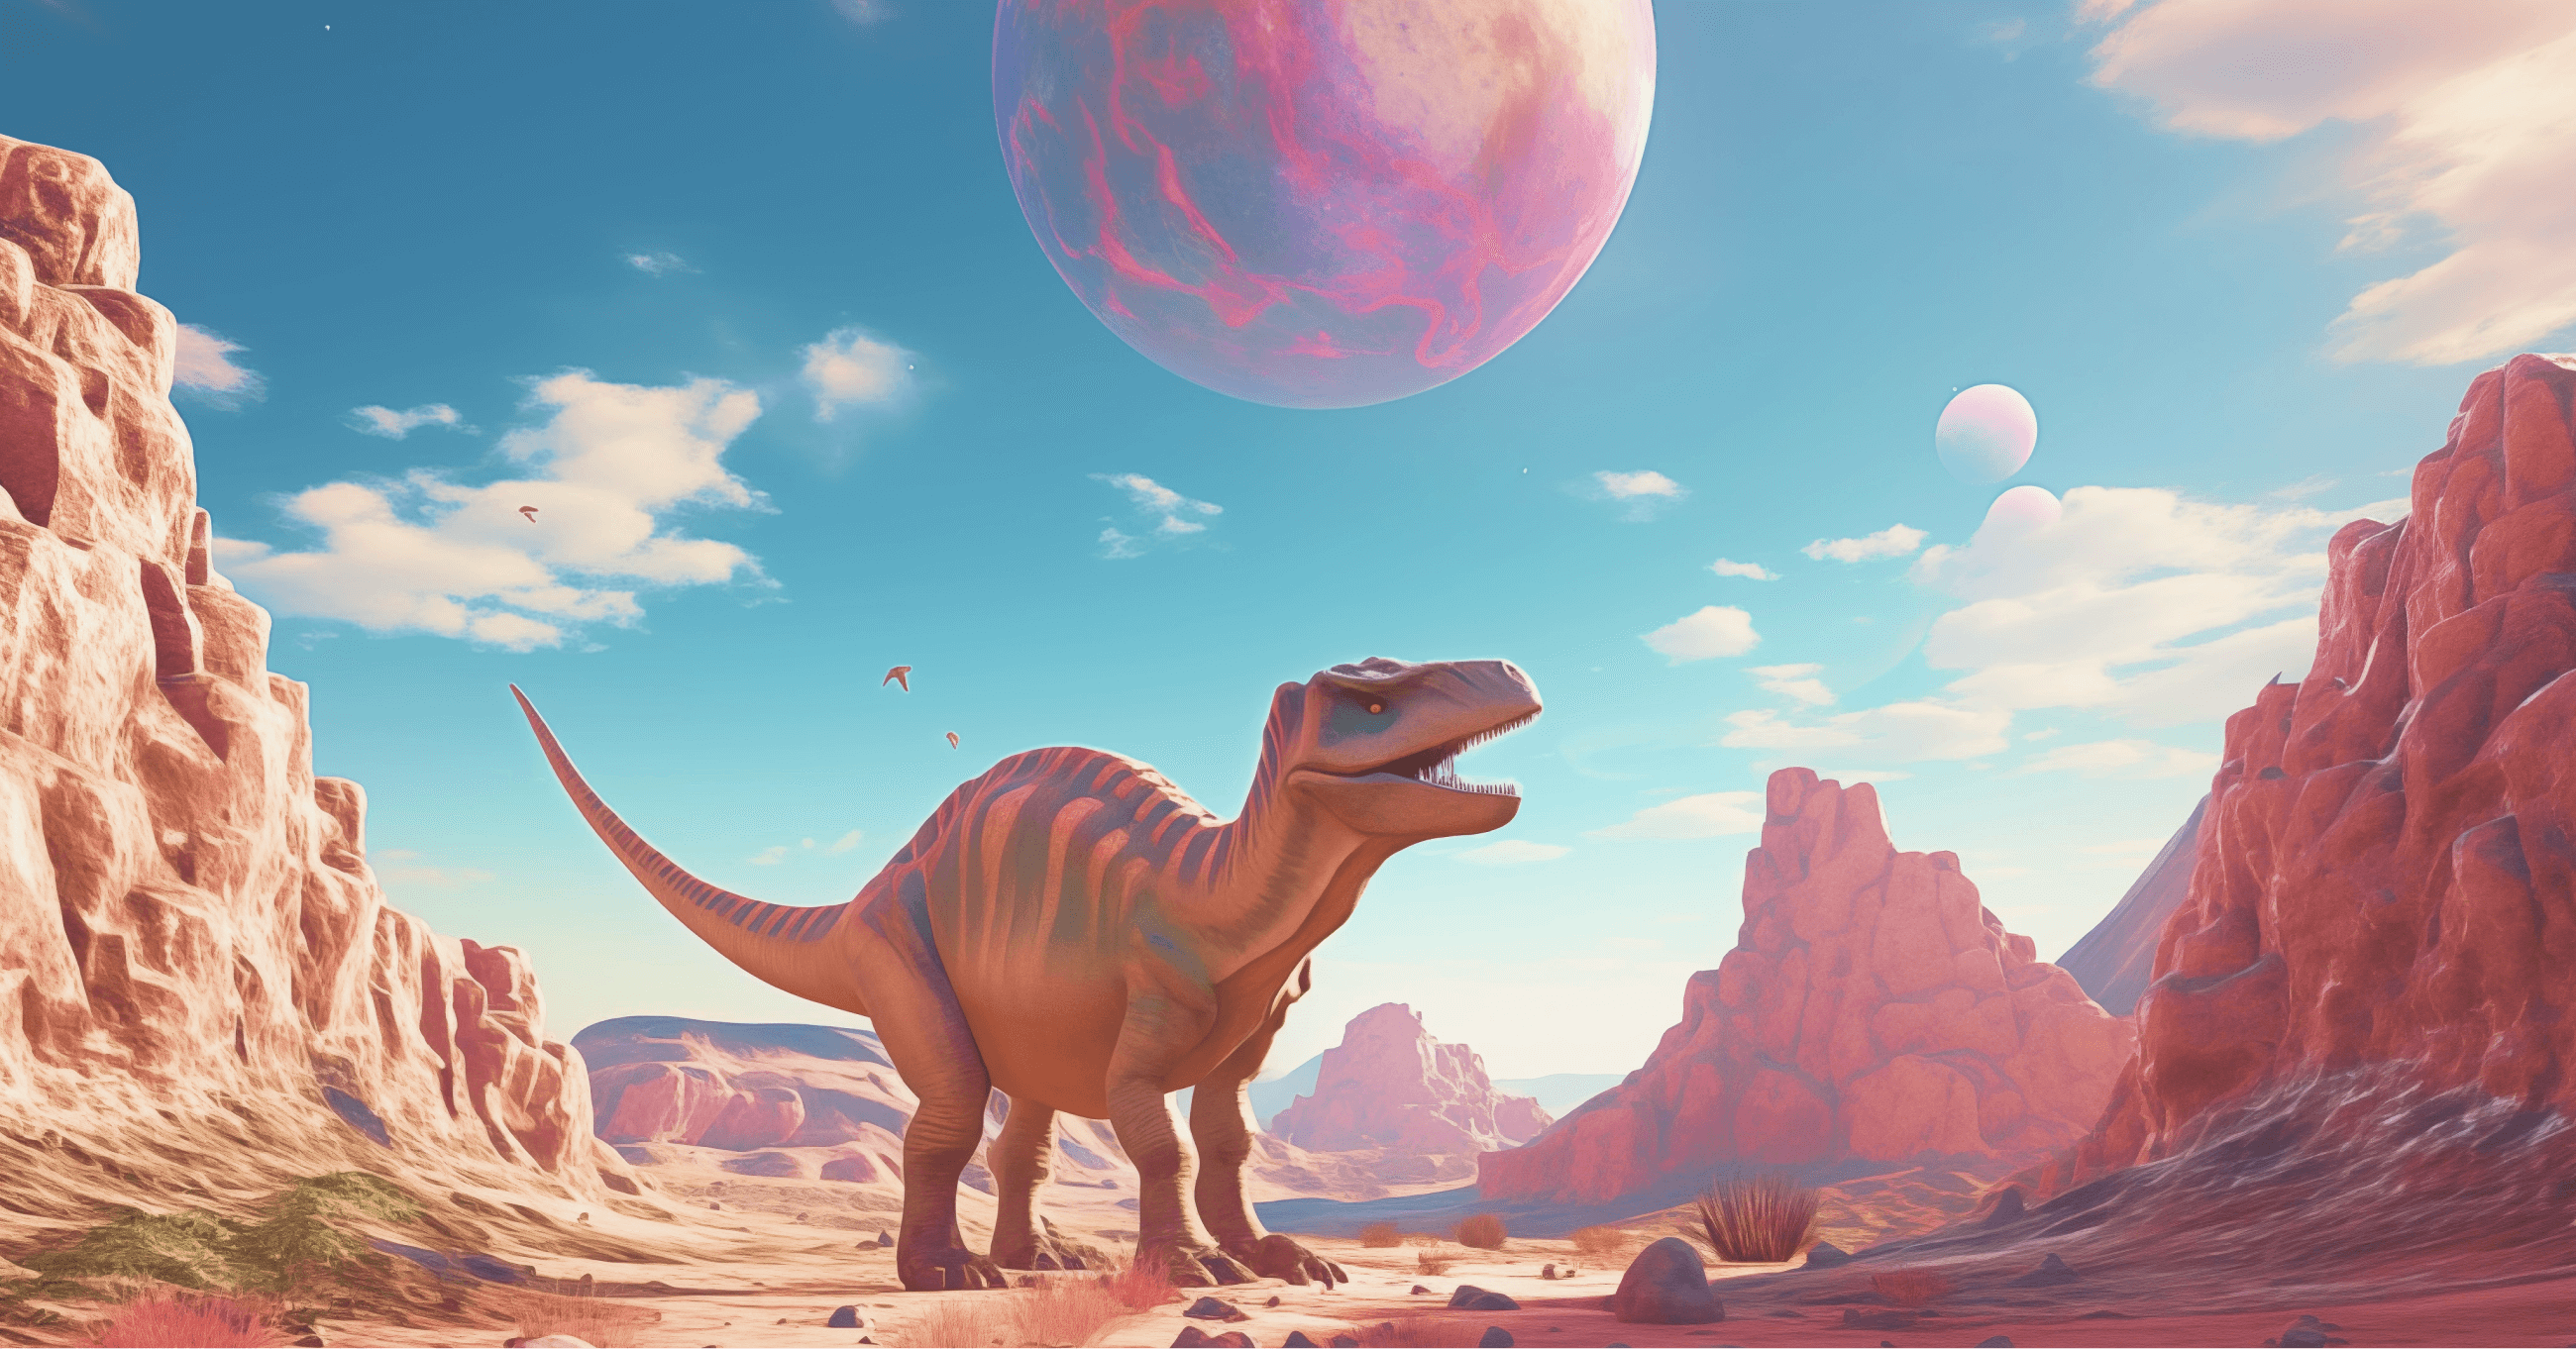 Asteroid or Dinosaur — Pick One | Edgar Allan Agency